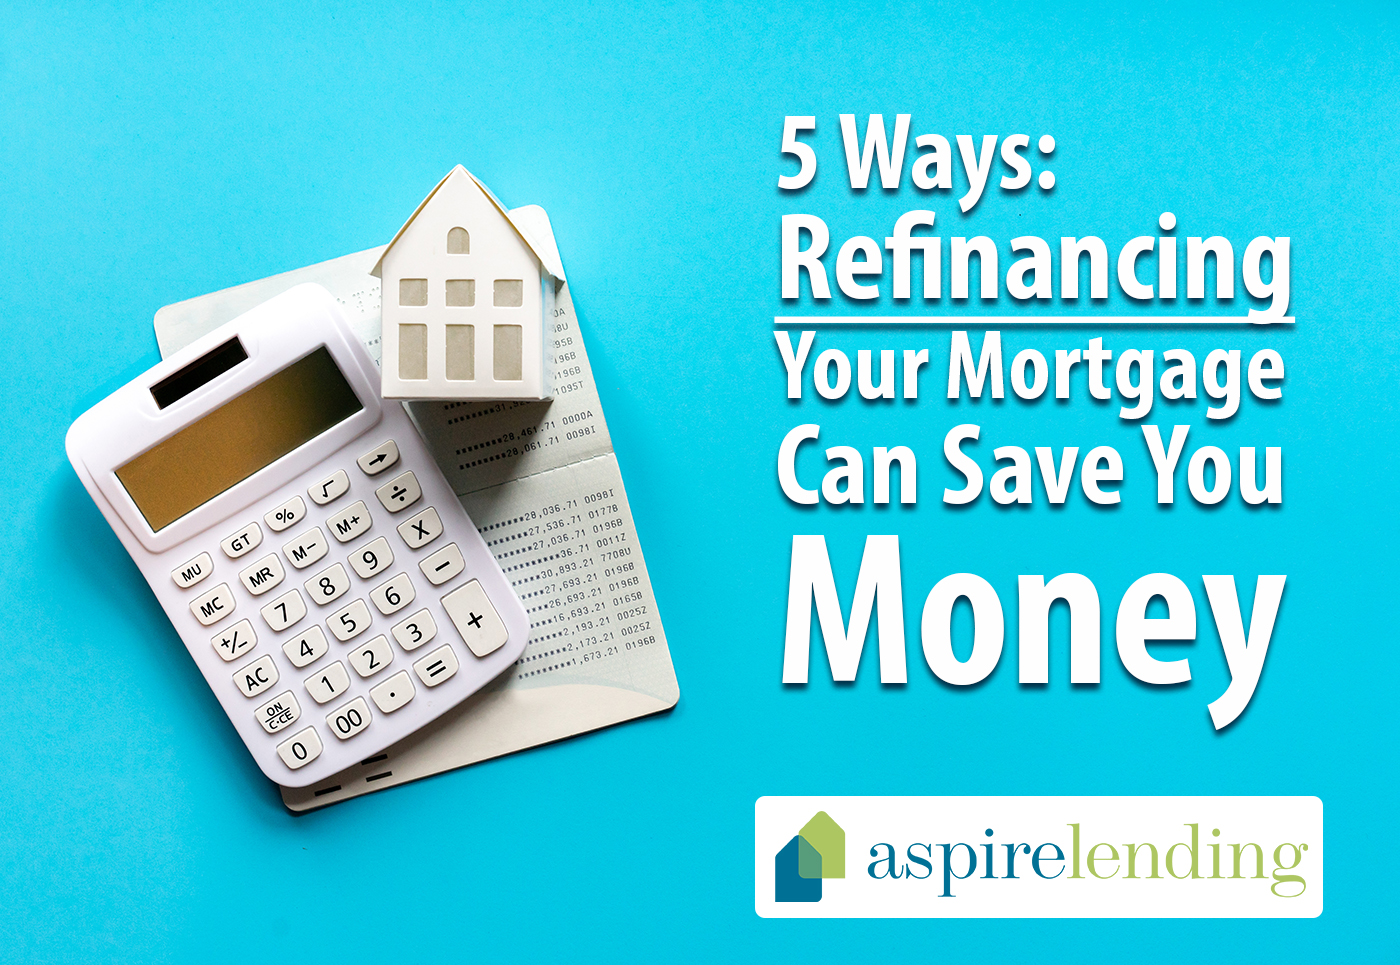 refinancing saves money